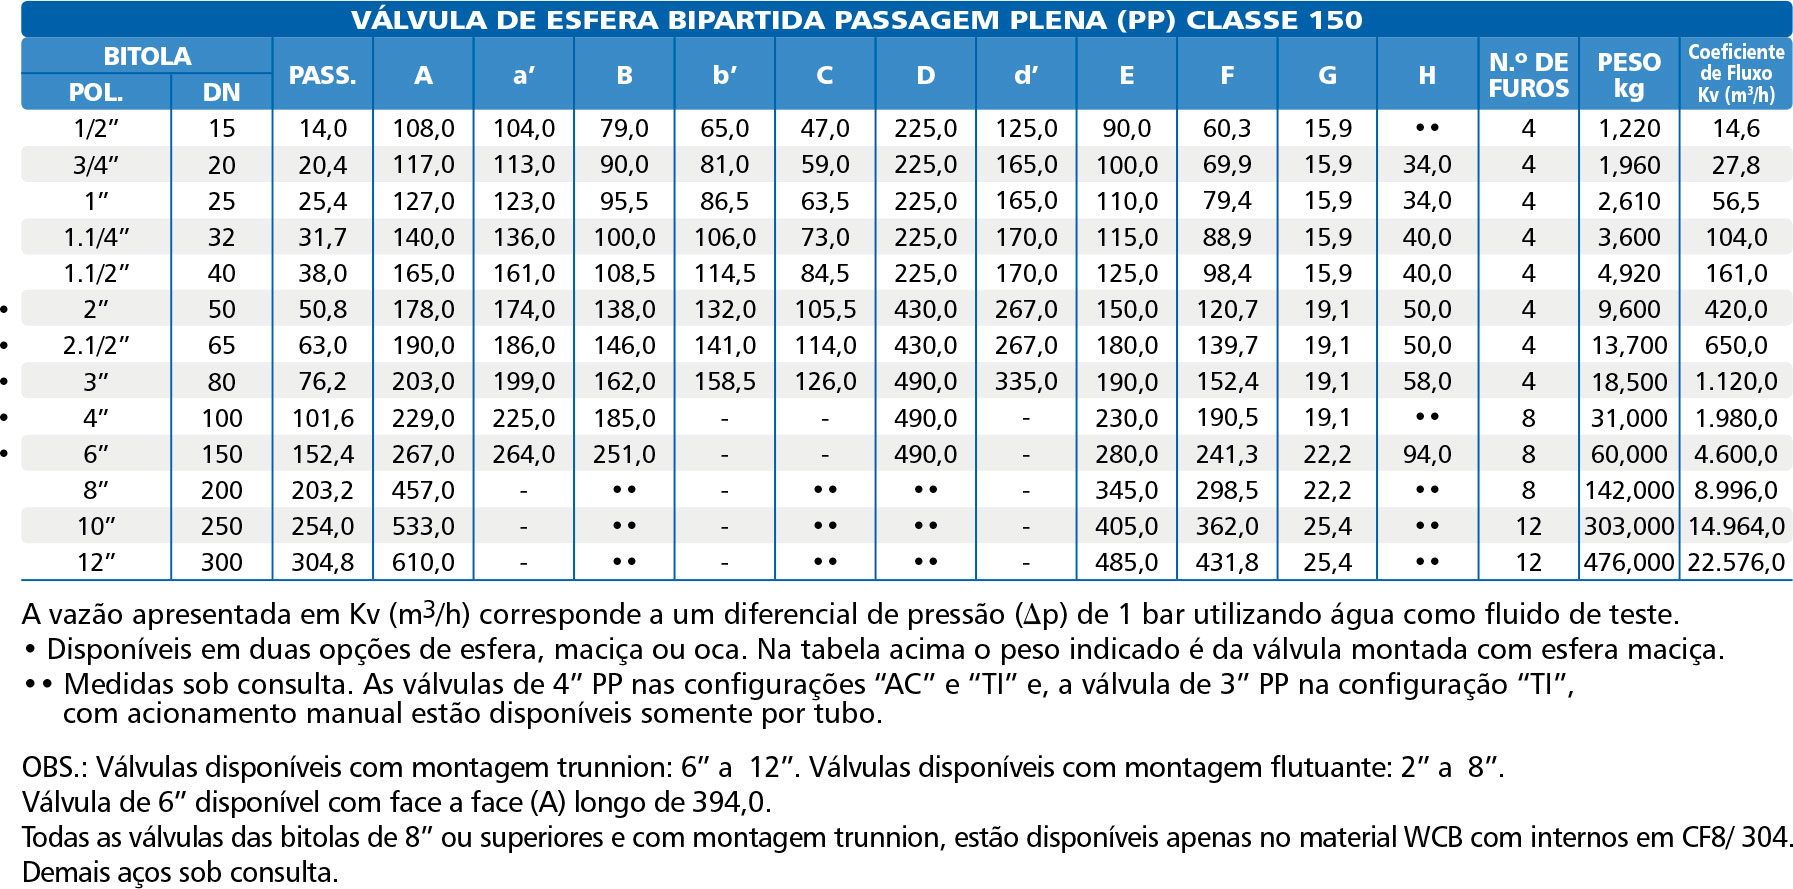 Valvula-de-Esfera-Bipartida-Passagem-Plena-Classe-150-tabela